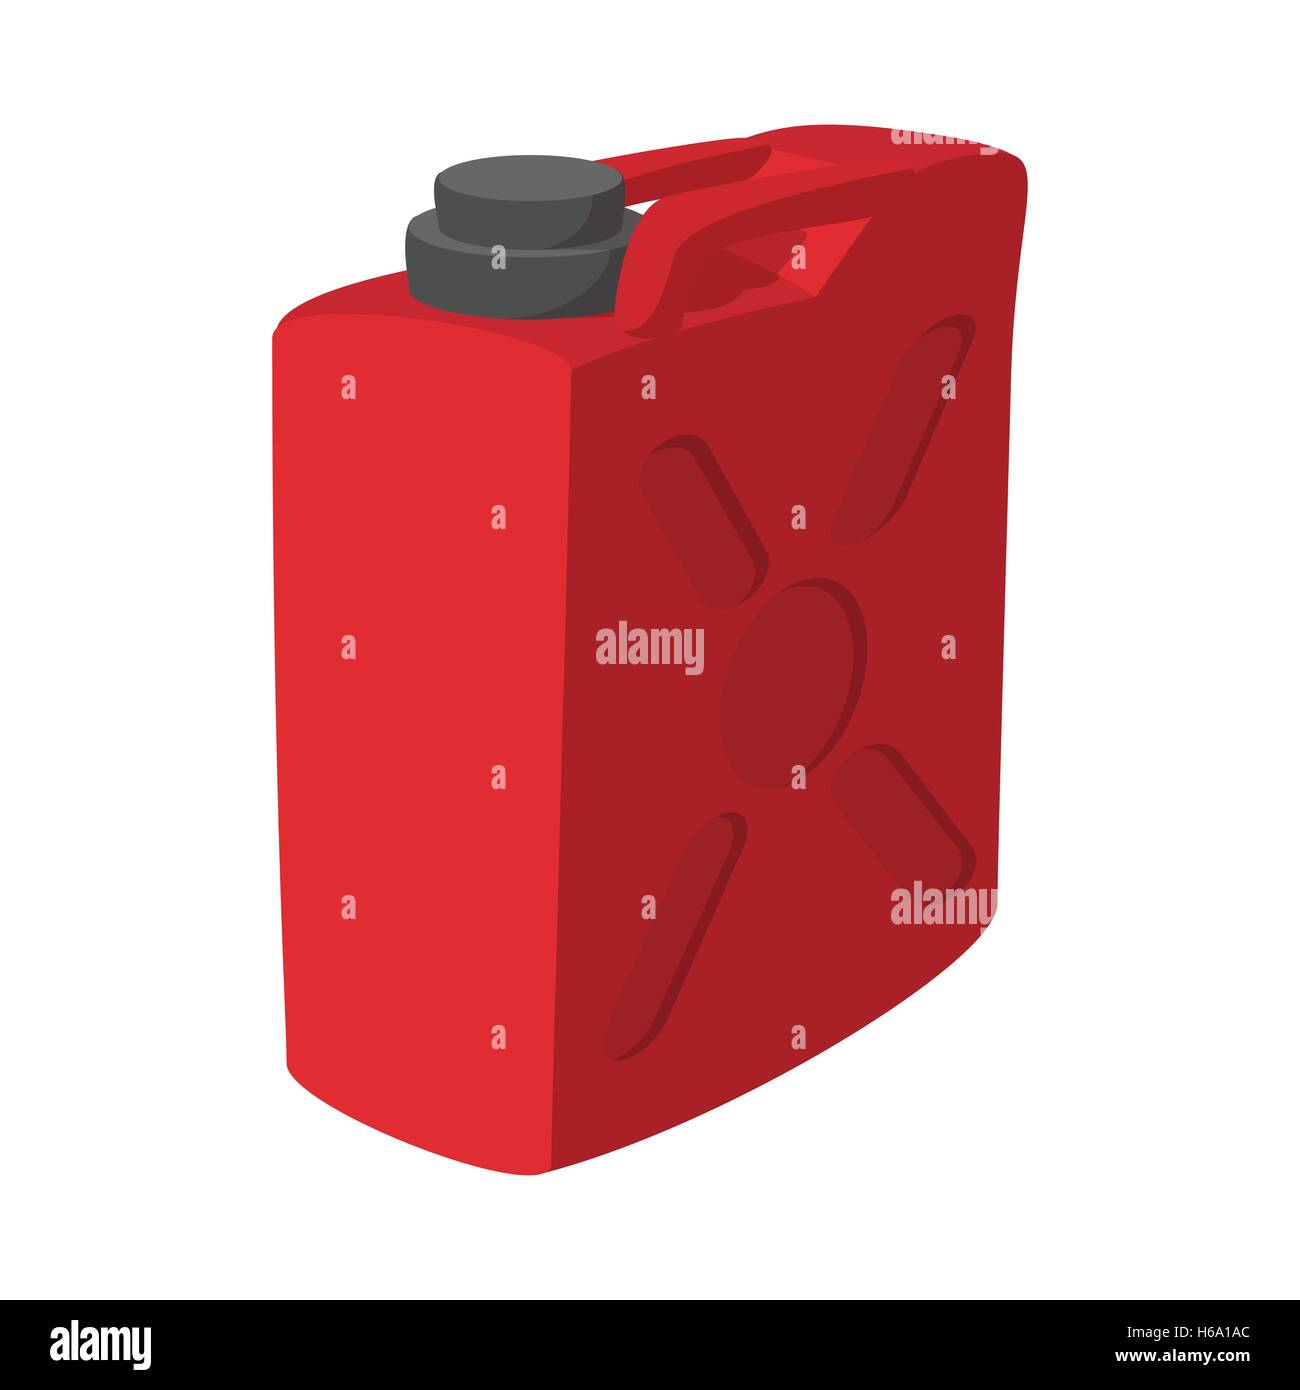 Kraftstoff-Container Kanister Cartoon Ikone Stock-Vektorgrafik - Alamy